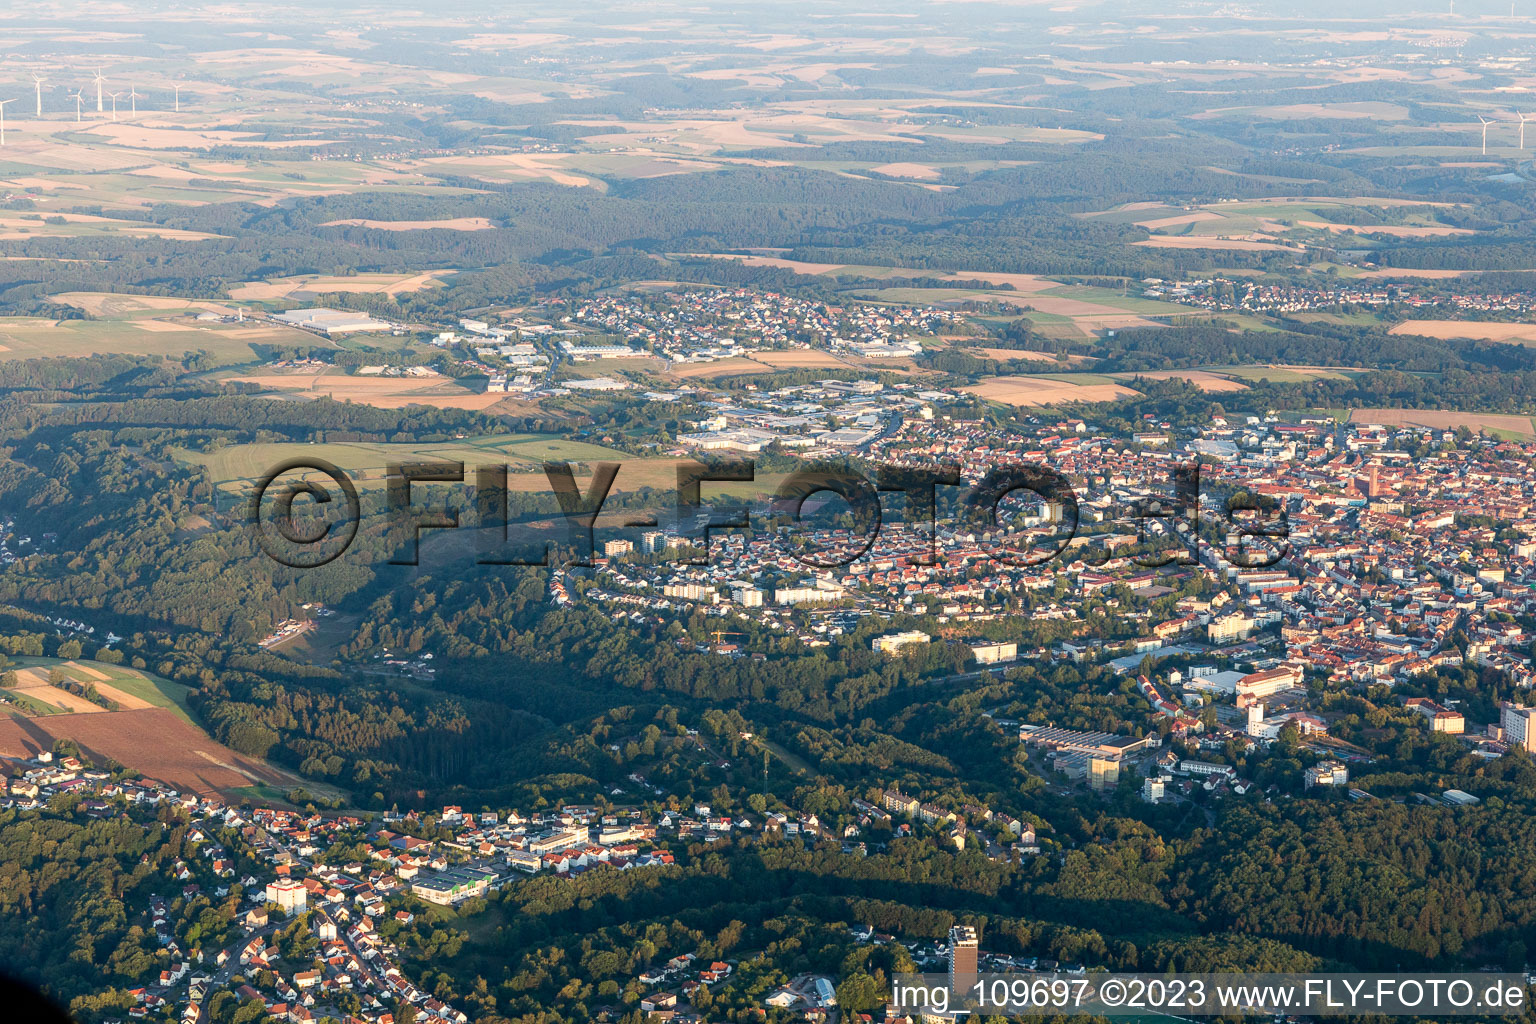 Bird's eye view of Pirmasens in the state Rhineland-Palatinate, Germany